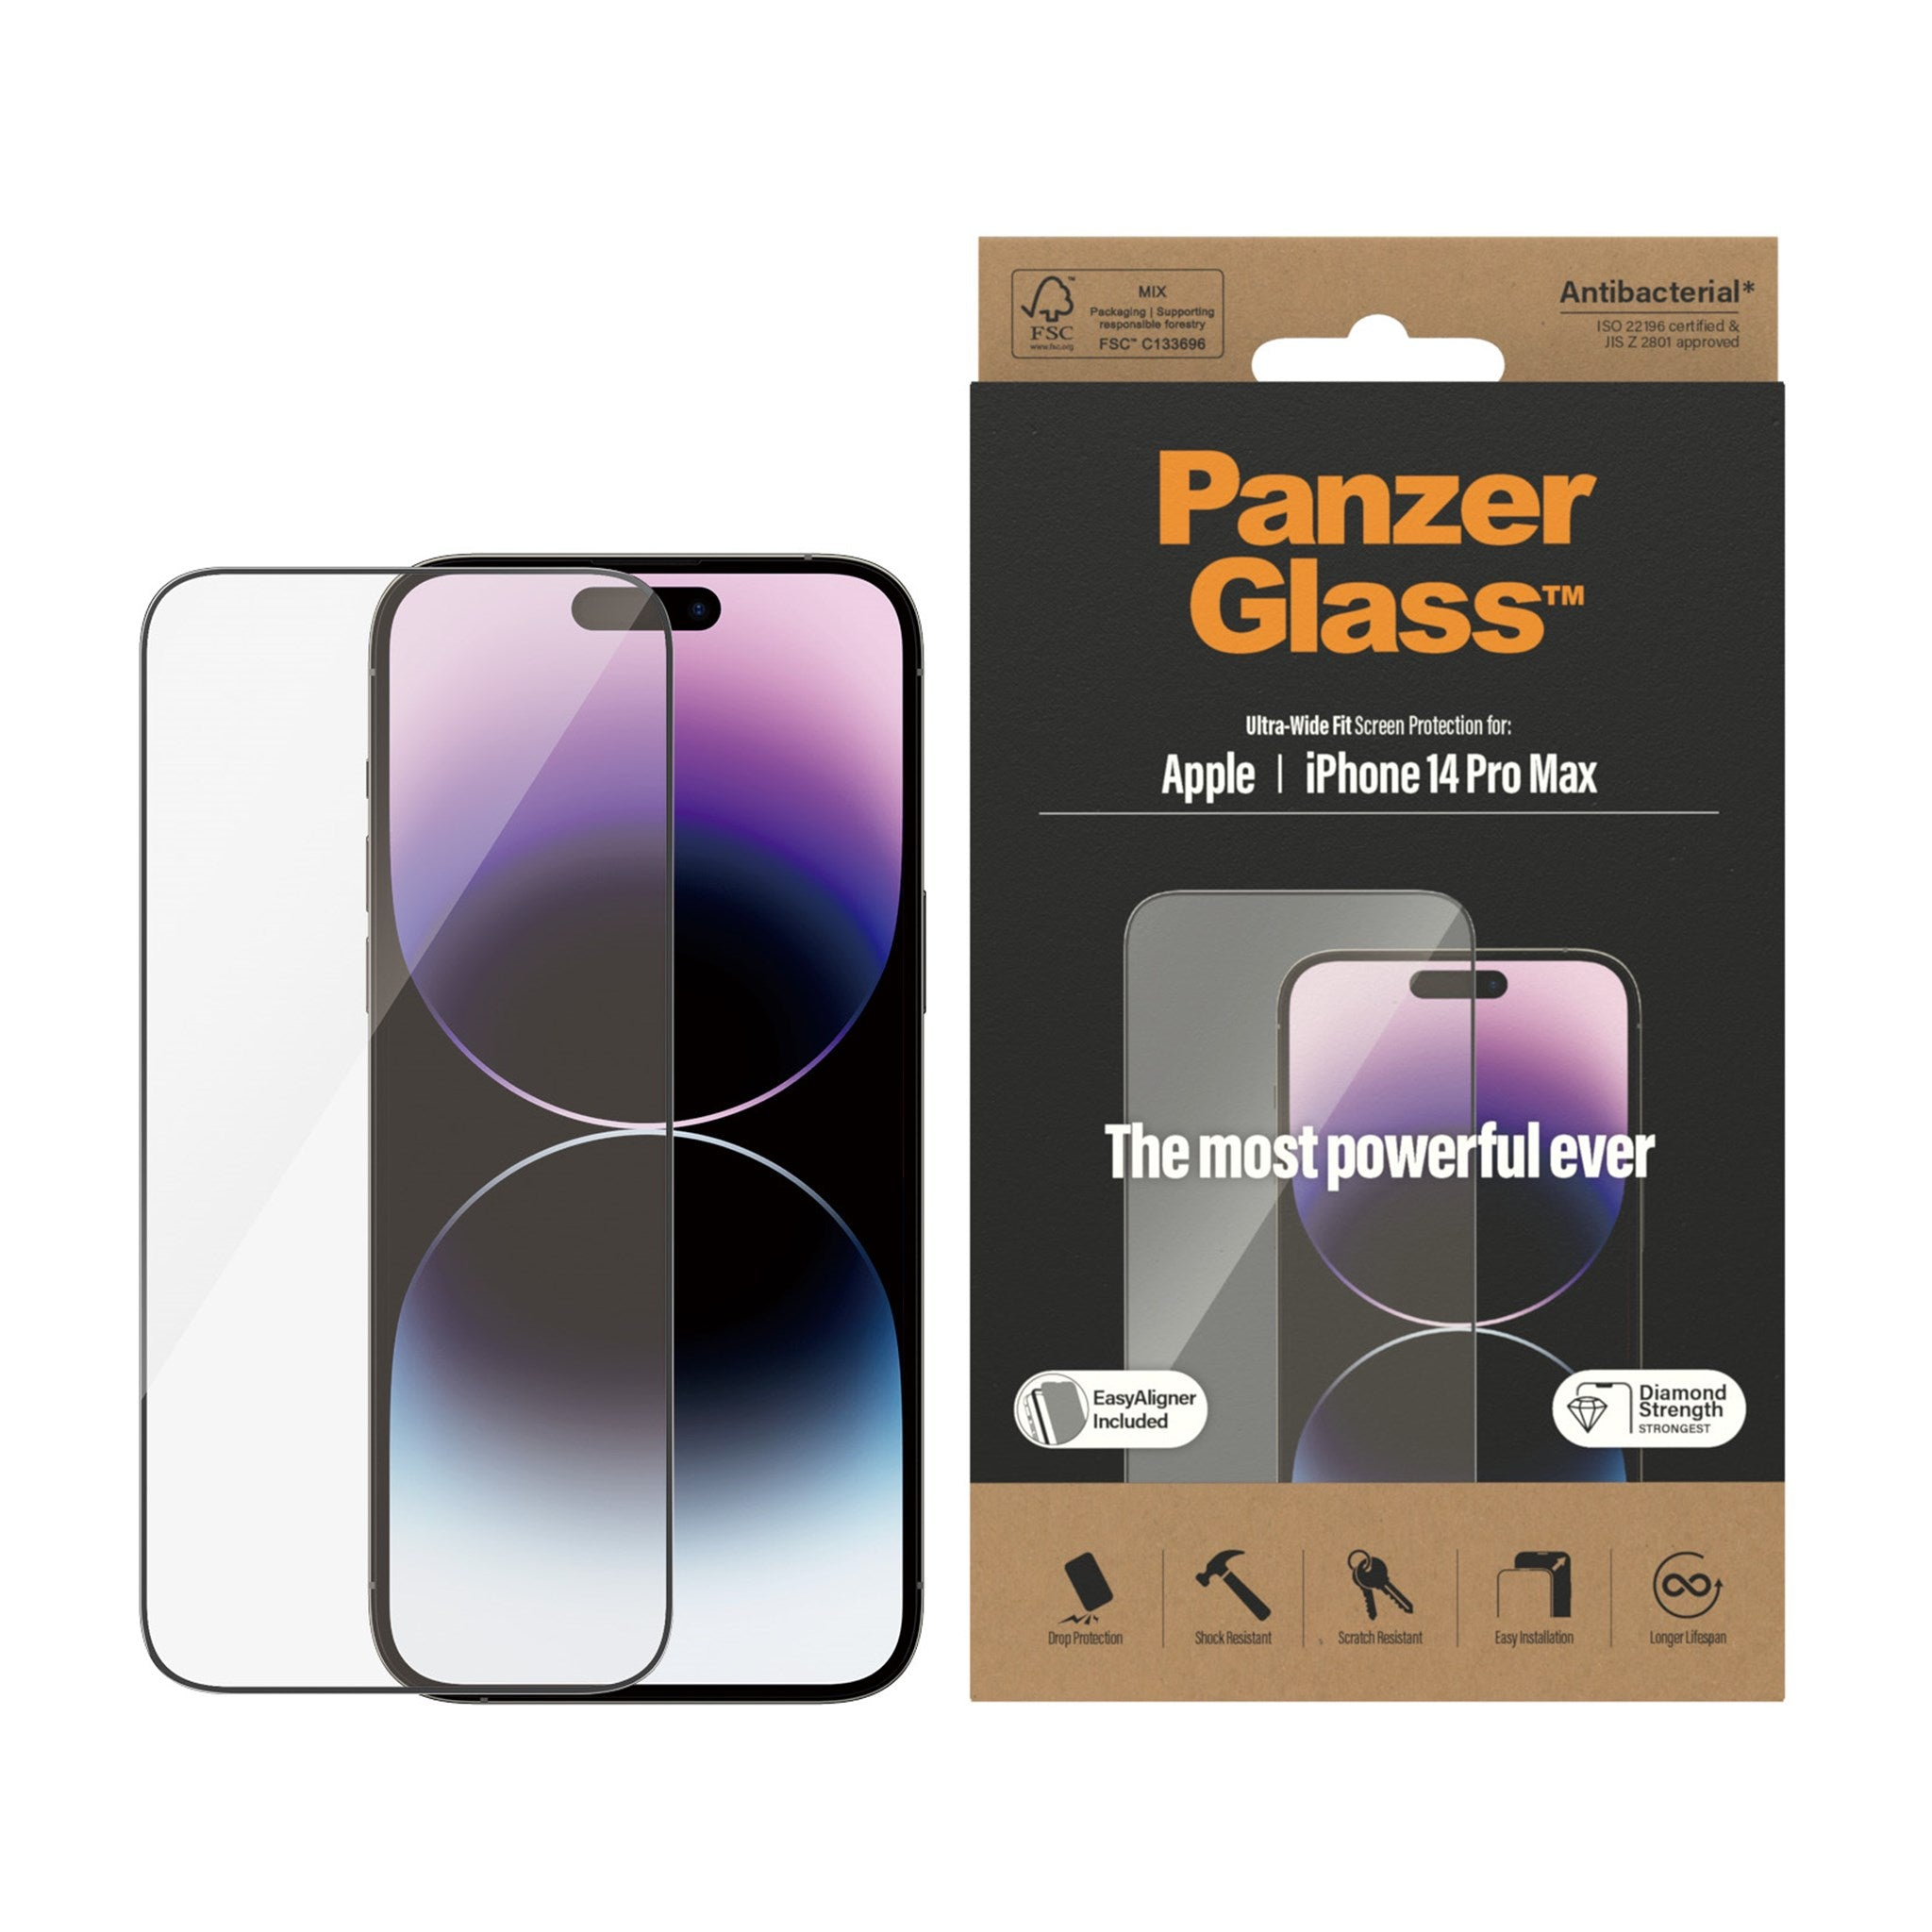 PANZERGLASS Apple iPhone Pro 14 Max | m. EasyAligner Fit 14 Ultra-Wide iPhone Pro Max) Displayschutz(für Apple